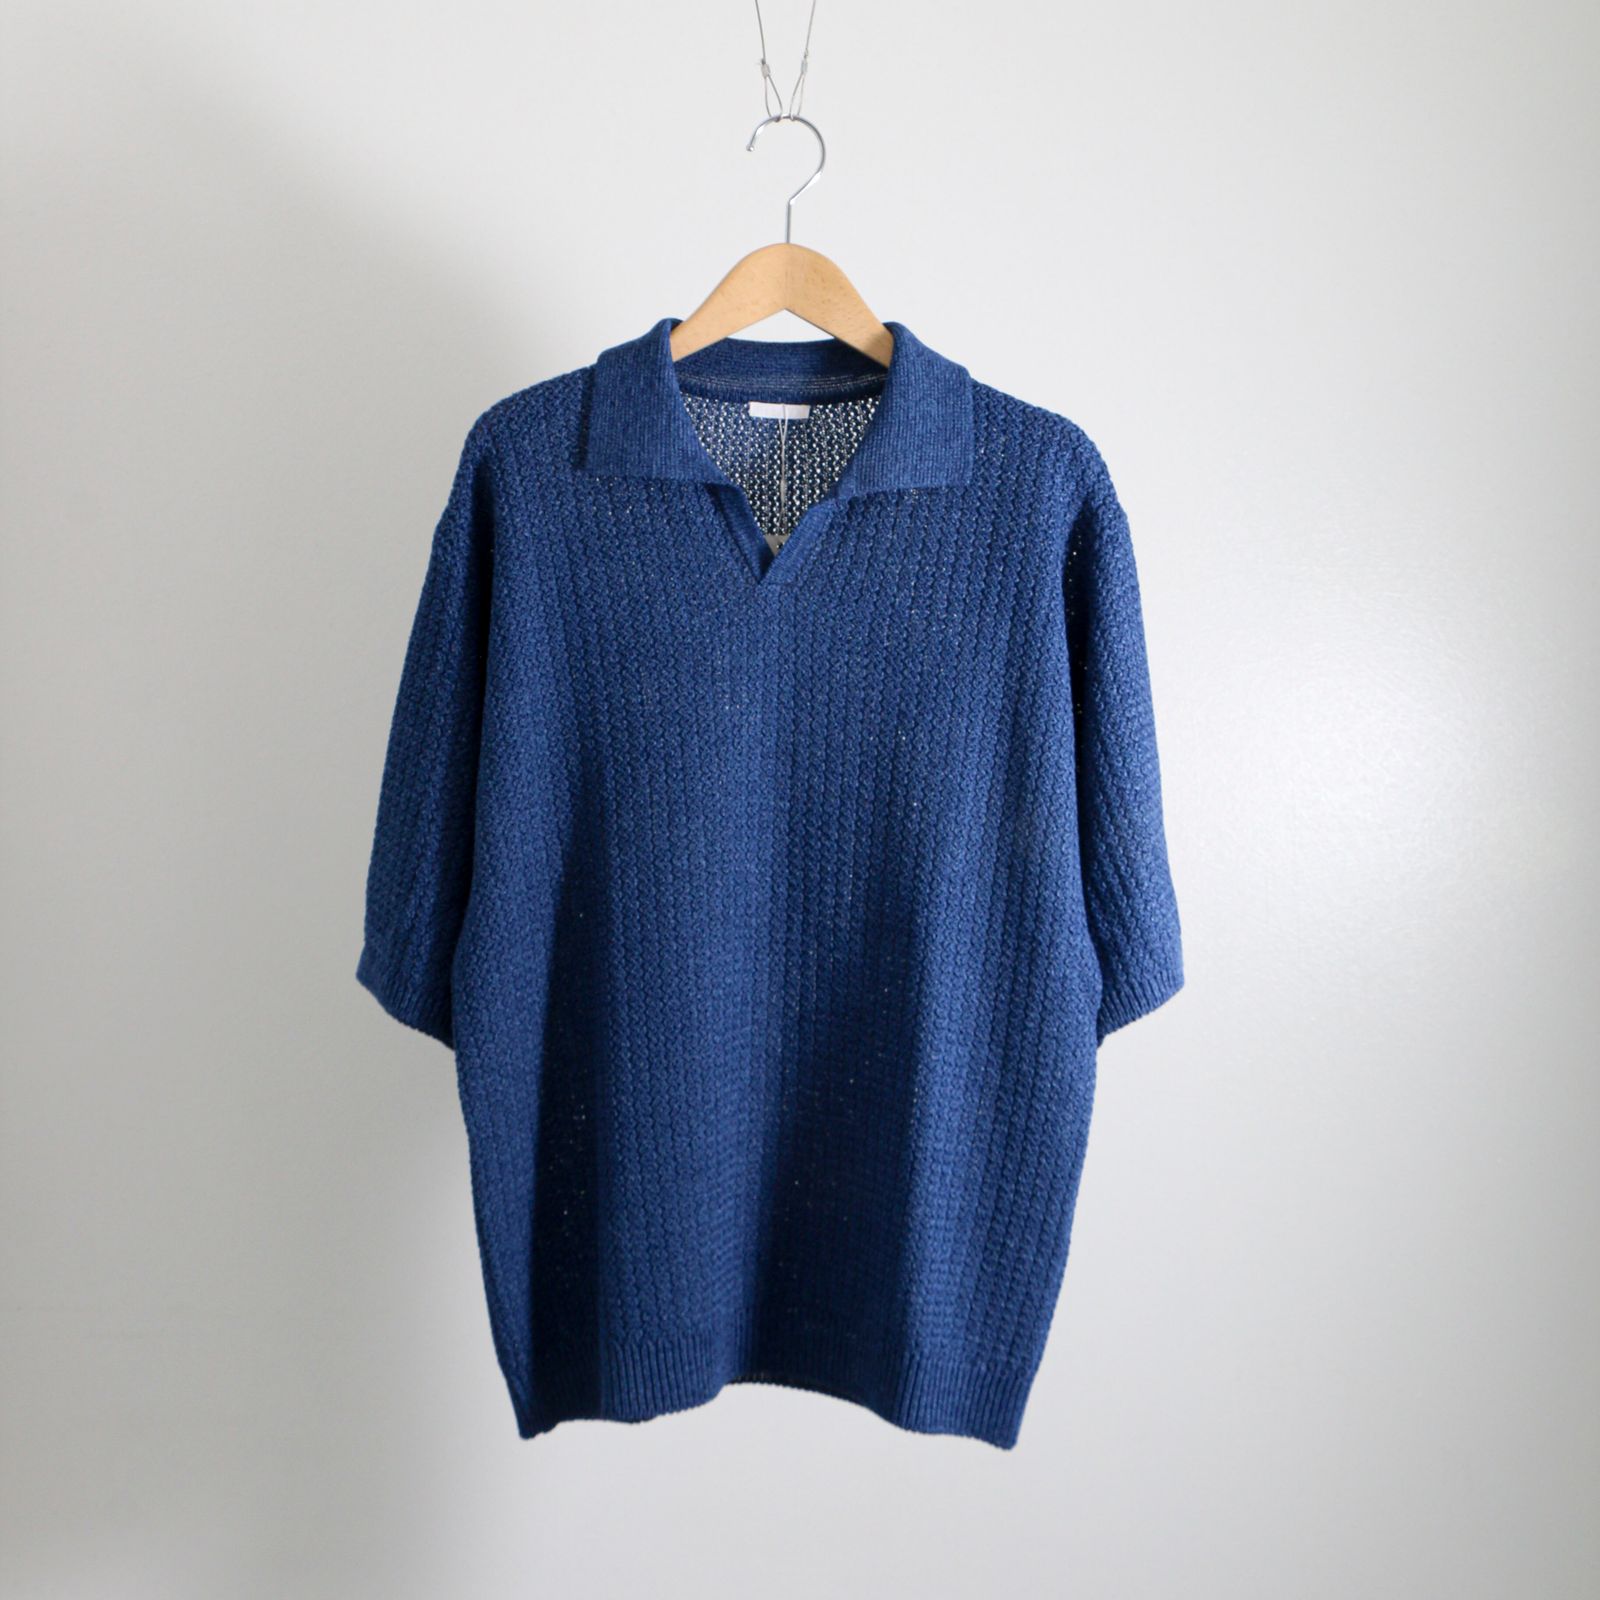 Blanc YM - Skipper knit Shirt BLUE / スキッパー / ニットシャツ 